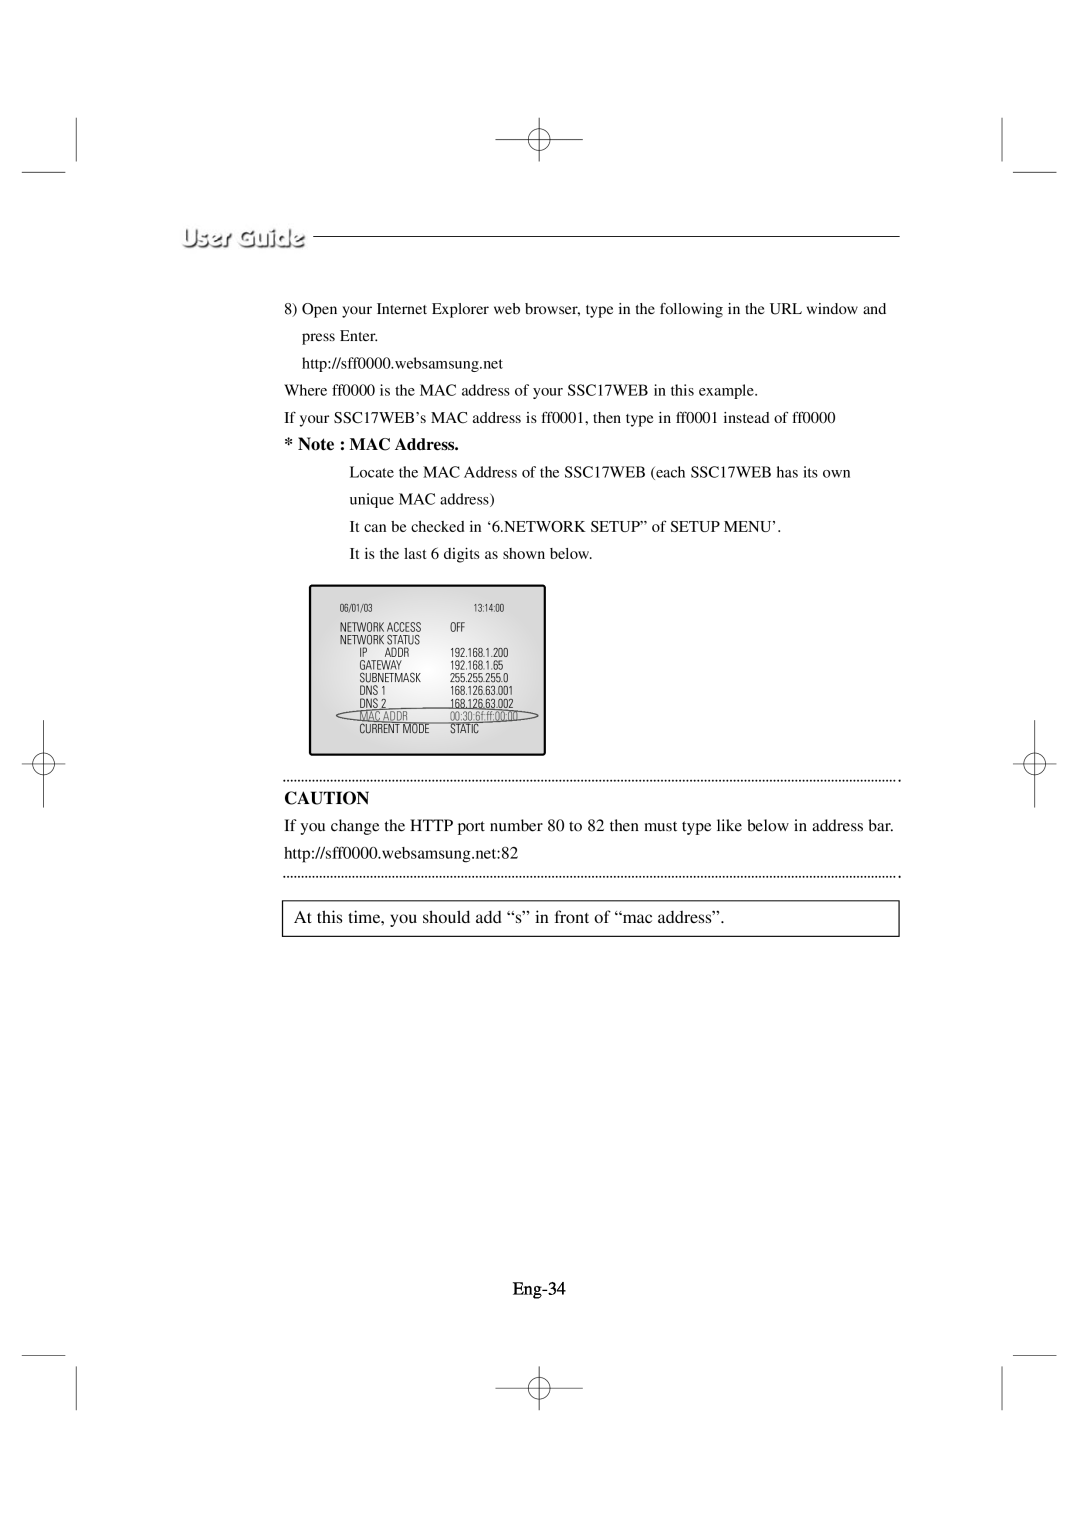 Samsung SSC17WEB manual Note MAC Address, Eng-34 